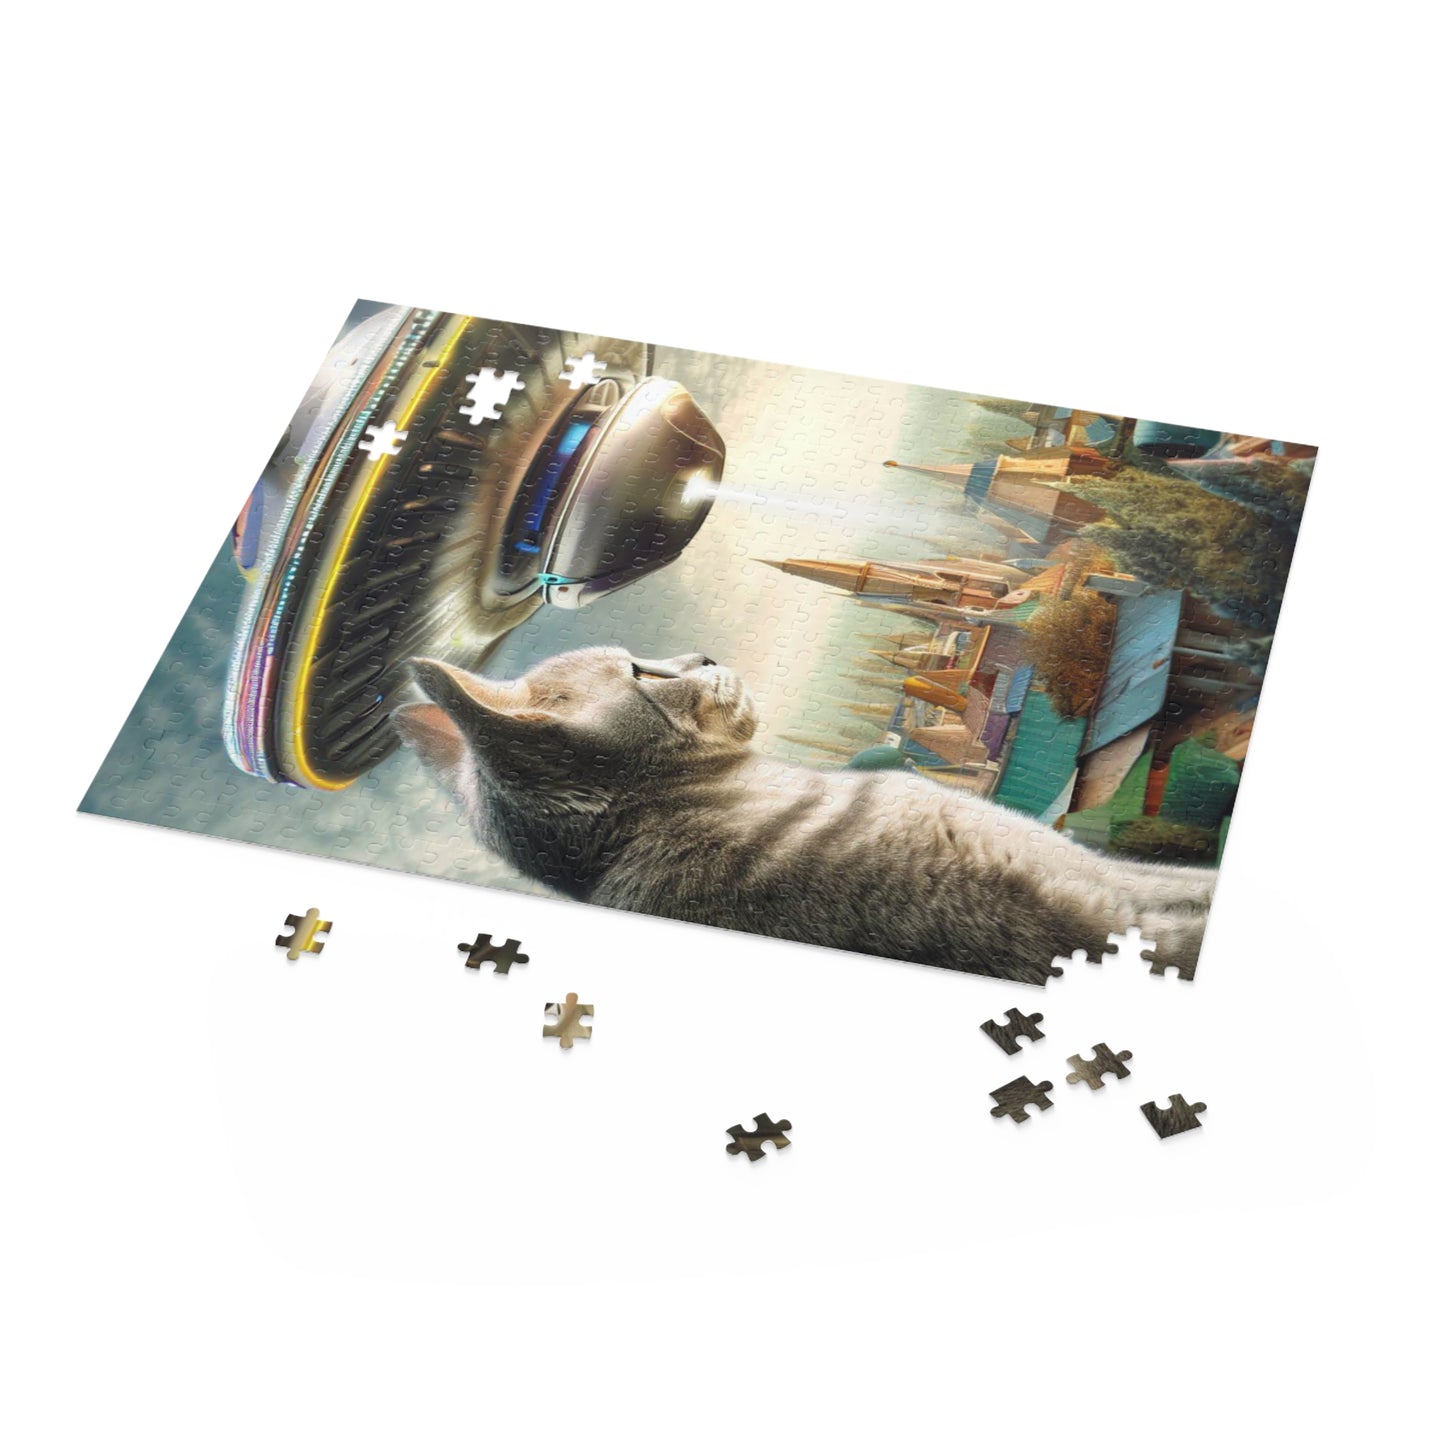 Astrocat Encounter Jigsaw Puzzle 500-Piece